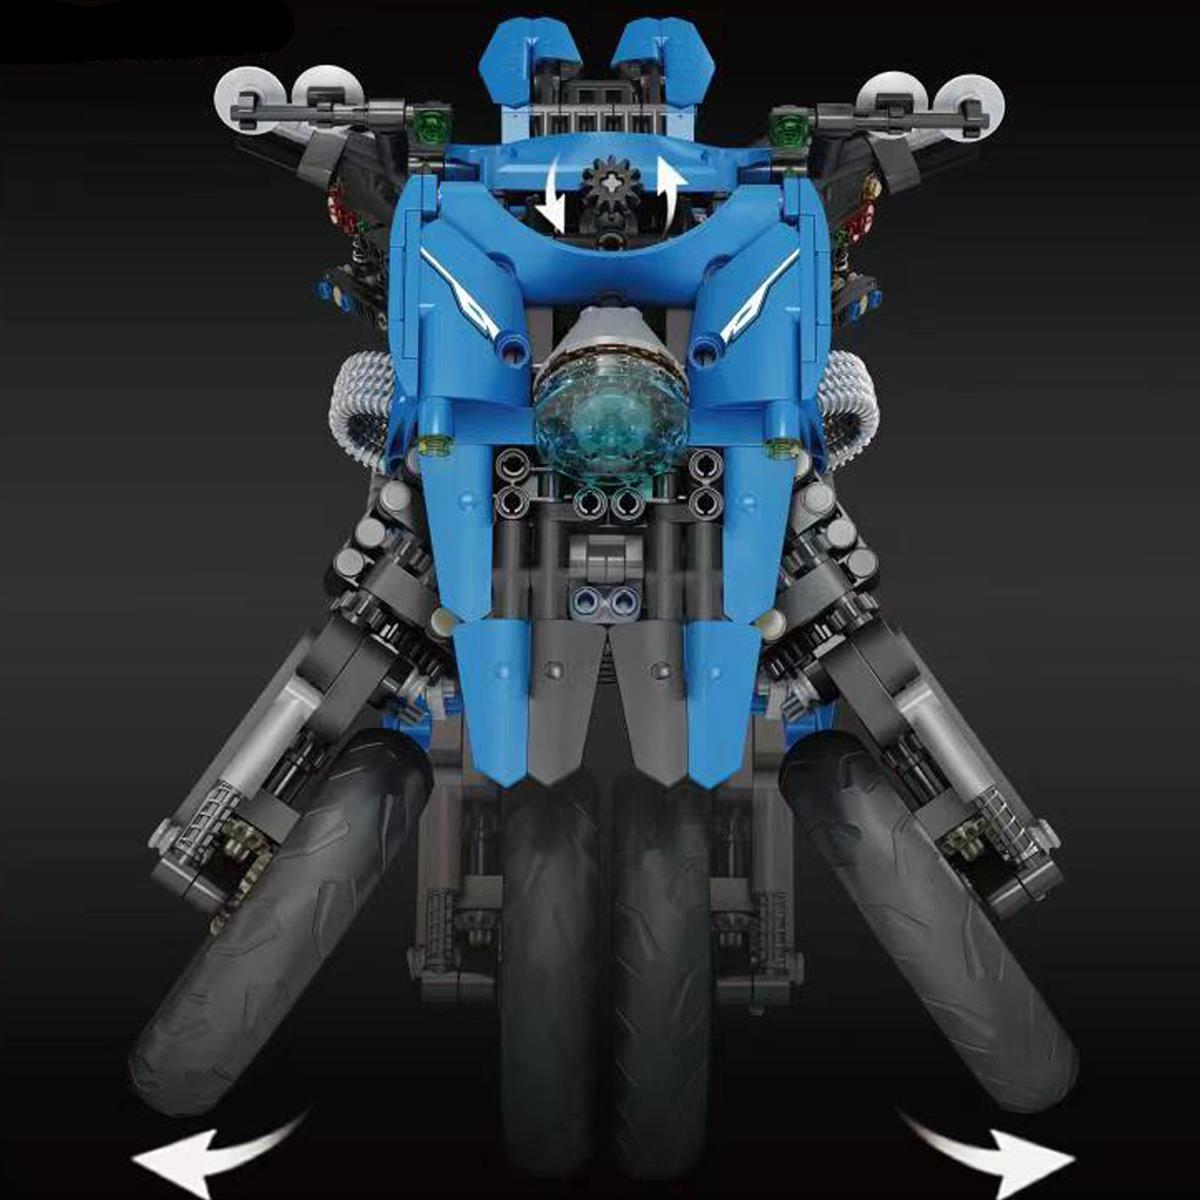 23009 - blaues Motorrad (Mould King)